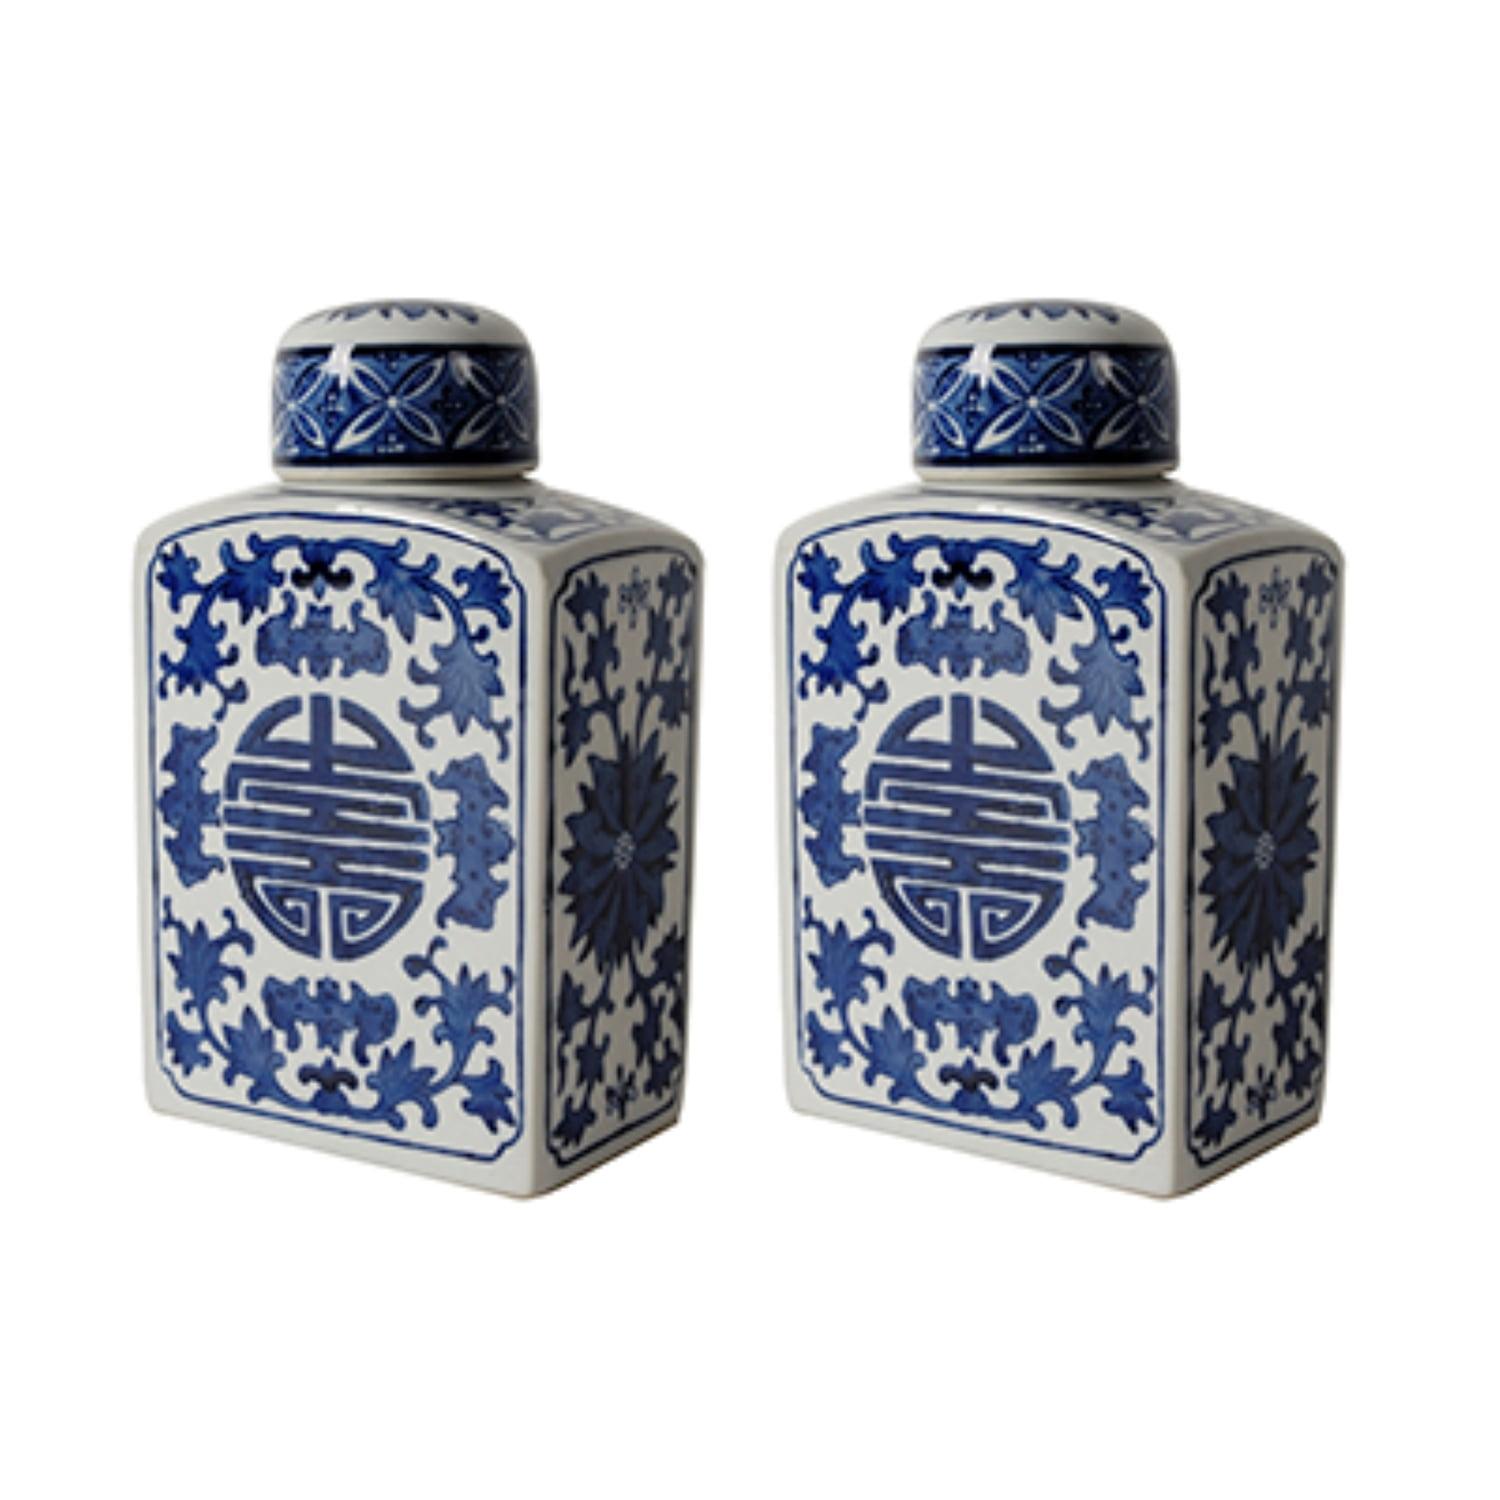 Vintage Aesthetic Blue-White Porcelain Decorative Jars, Set of 2